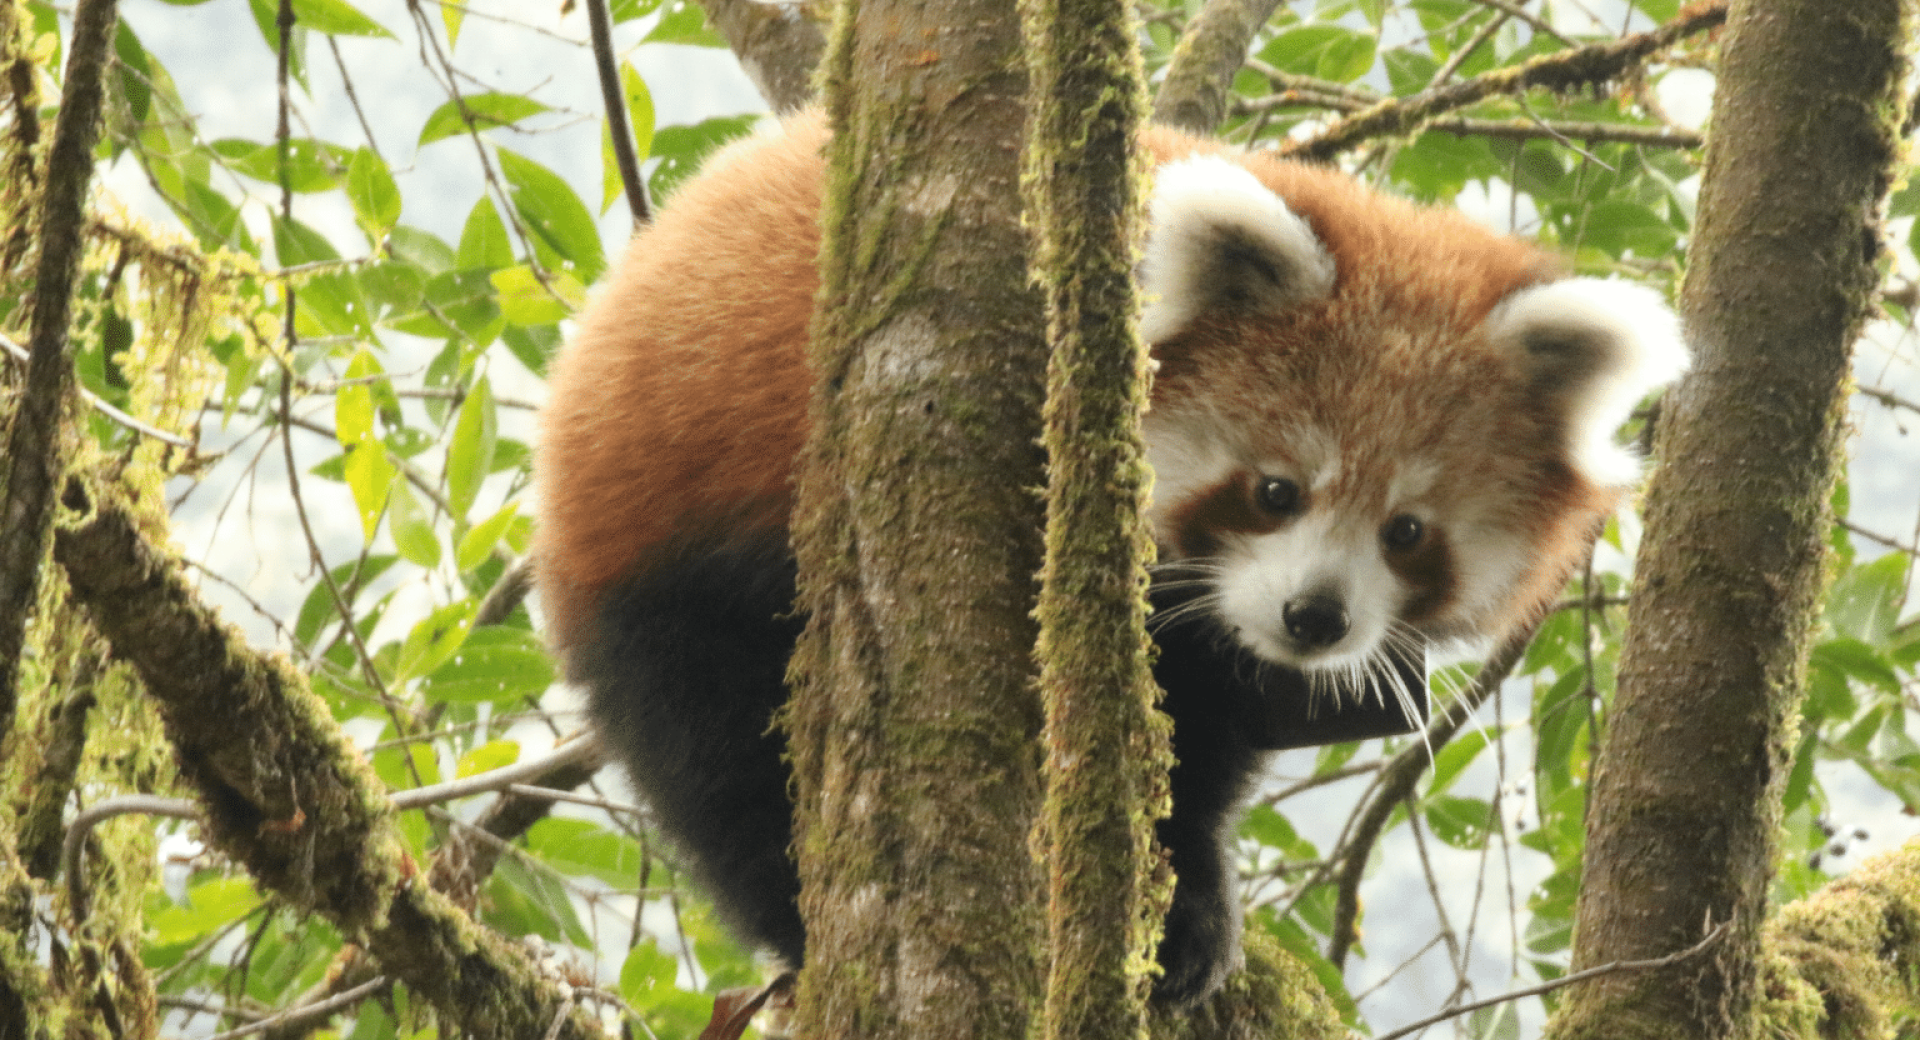 Press Release: Evidence of Growing Red Panda Numbers in Nepal